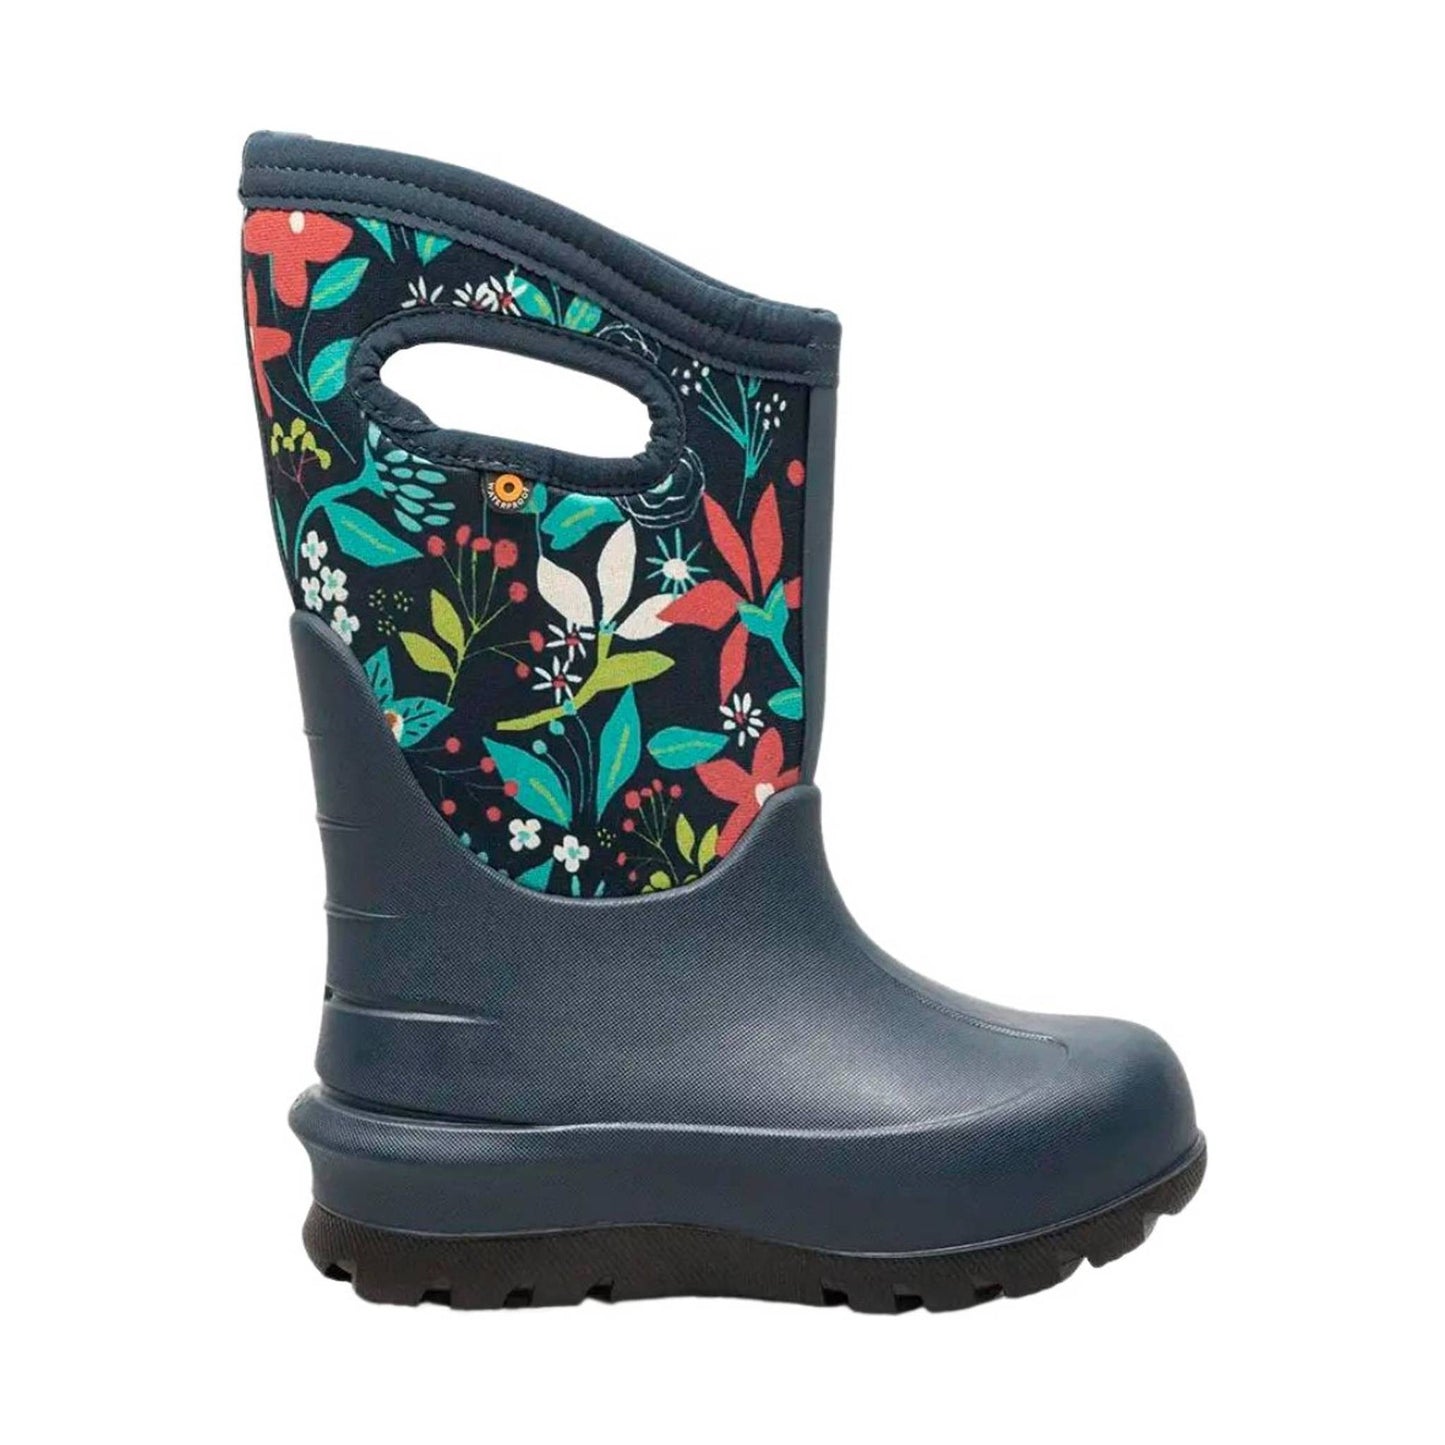 Bogs Kids' Classic Cartoon Flower Rain Boots - Ink Blue Multi